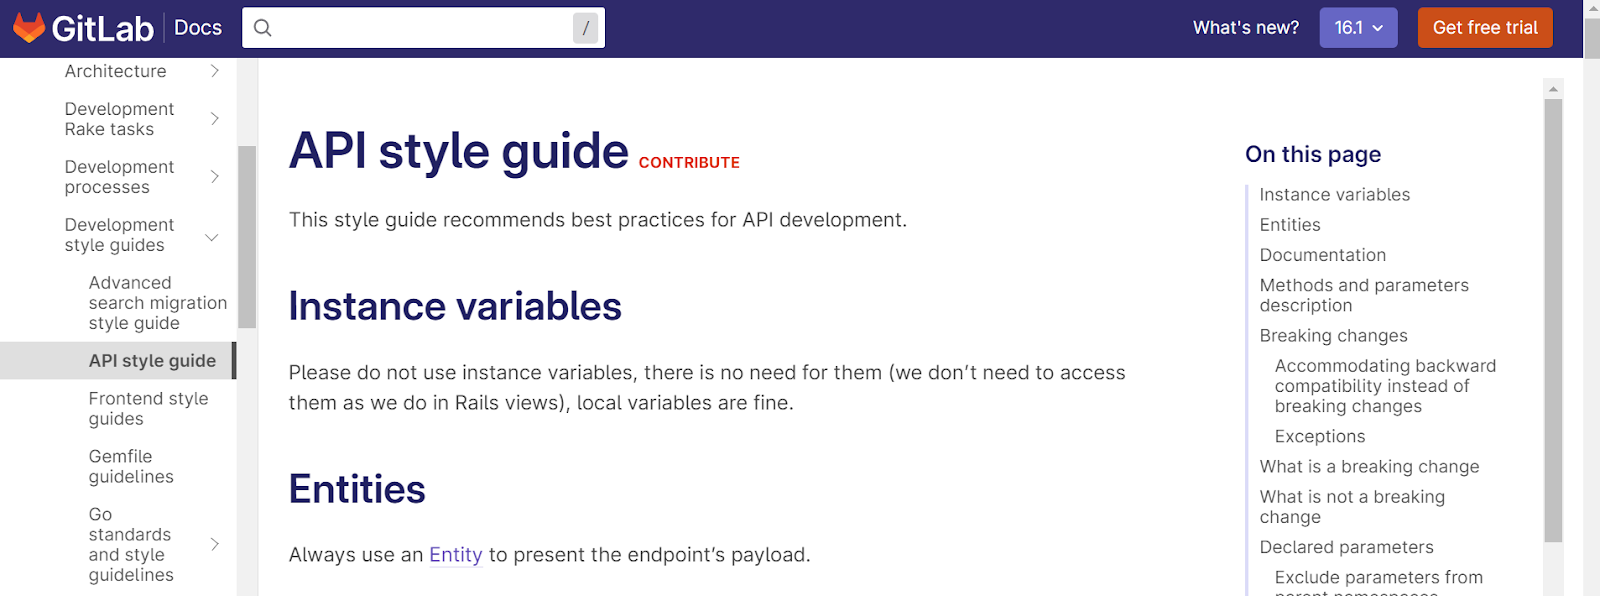 GitLab API style guide